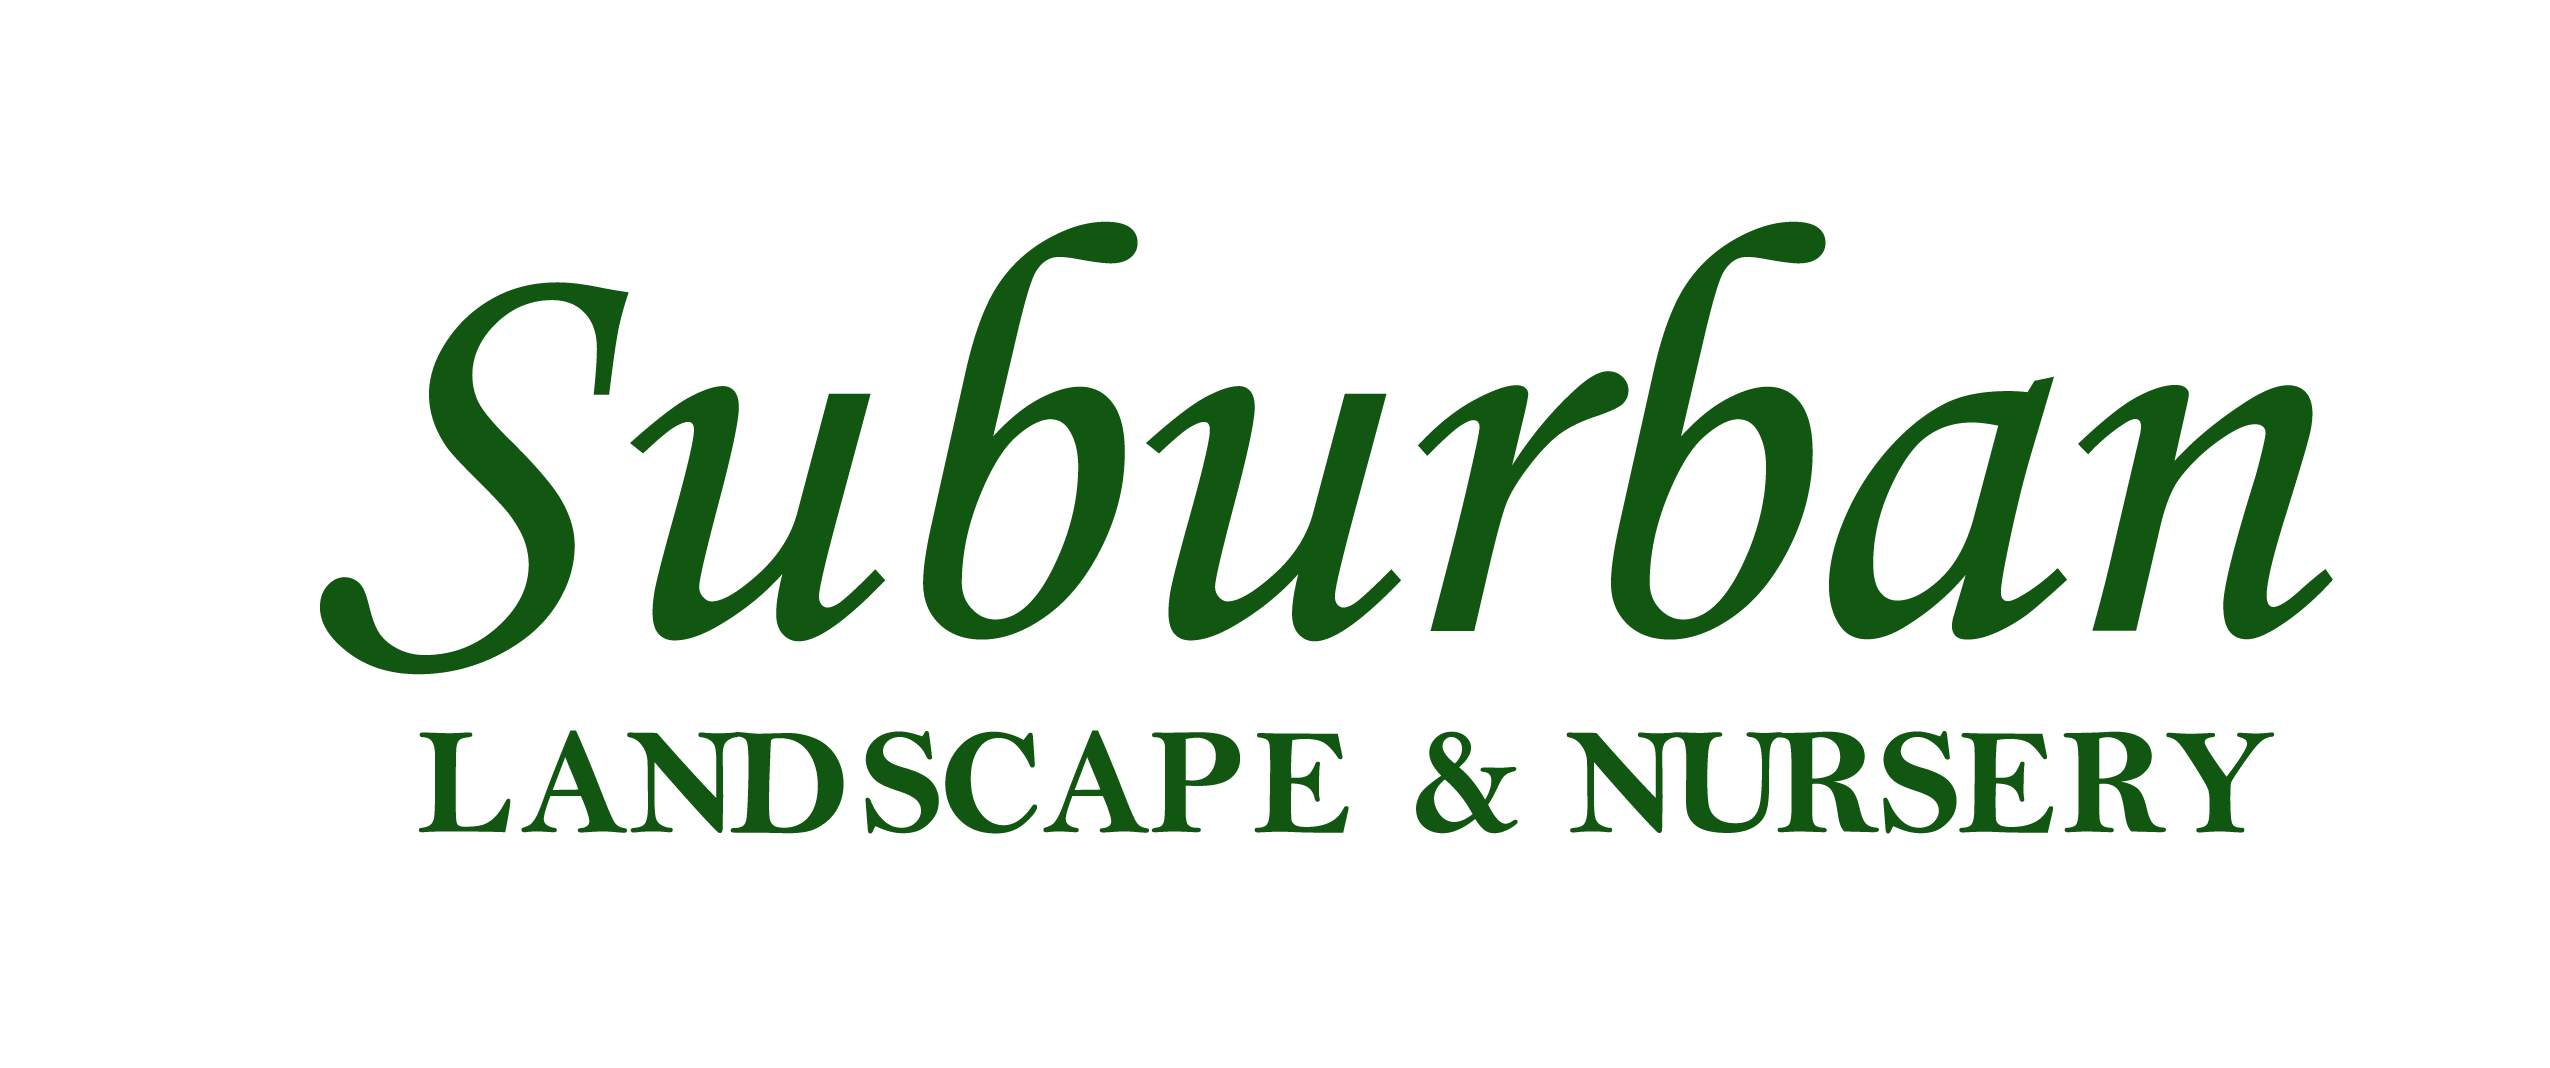 Suburban Landscaping & Nursery